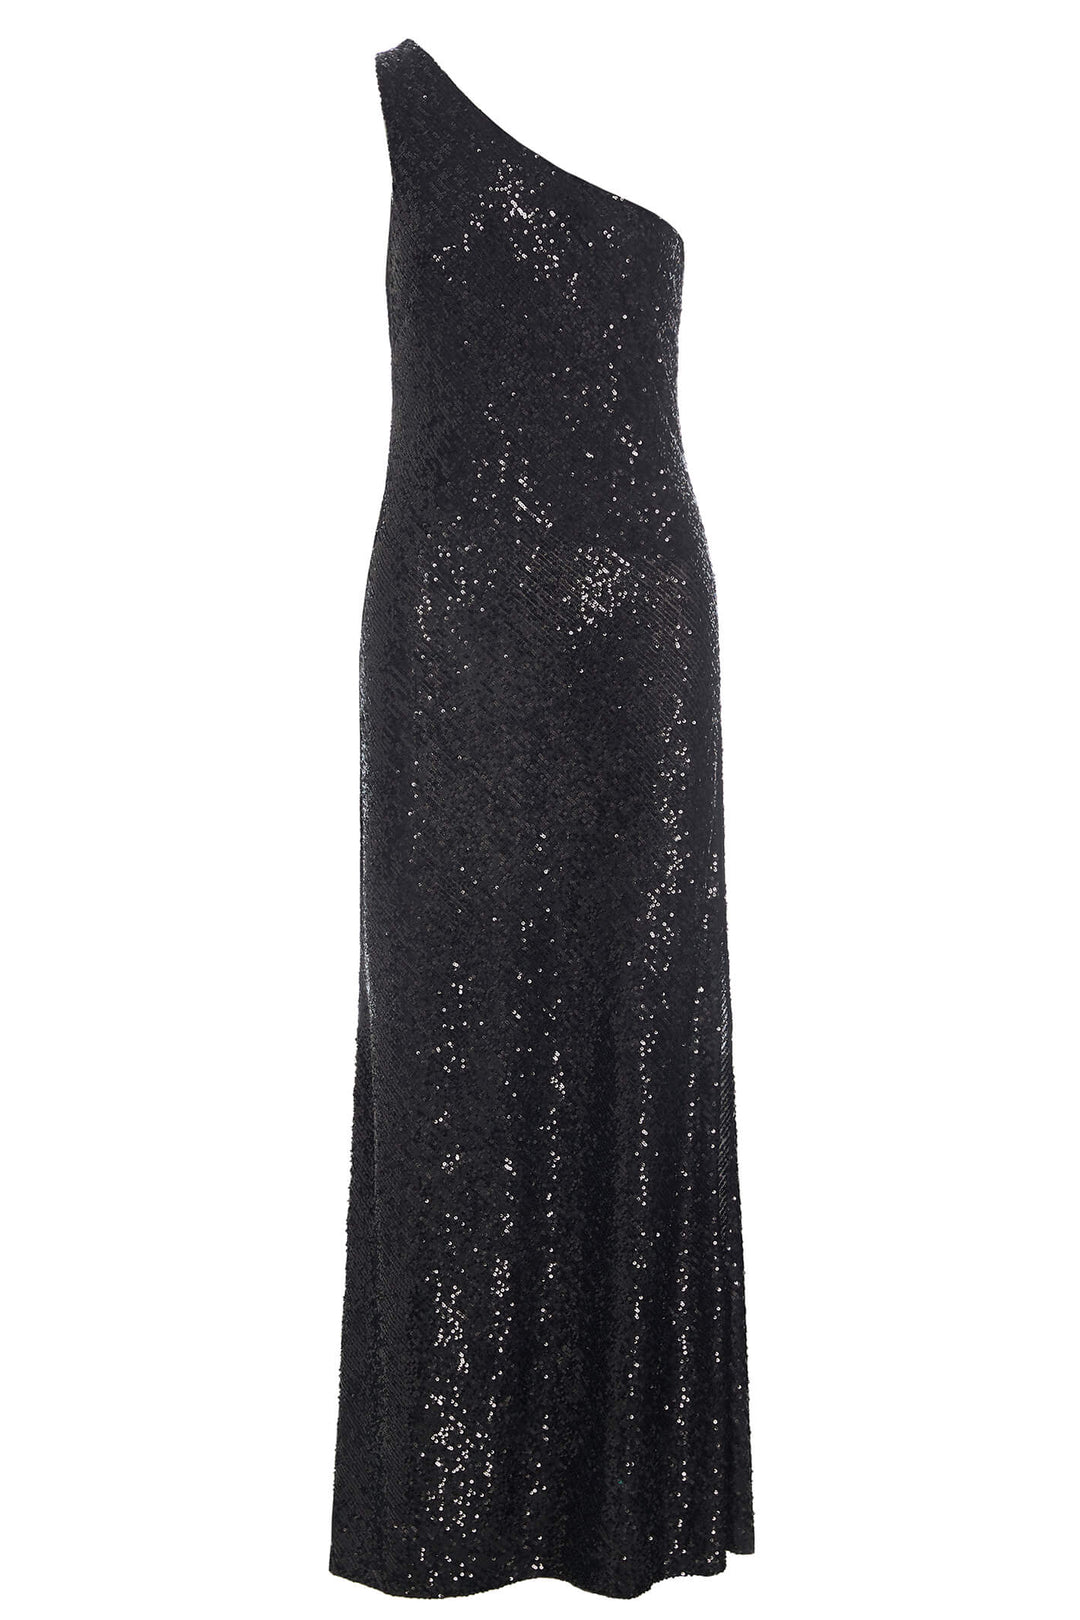 Dea Kudibal Minello 1551023 Black One Shoulder Sequin Evening Dress - Olivia Grace Fashion